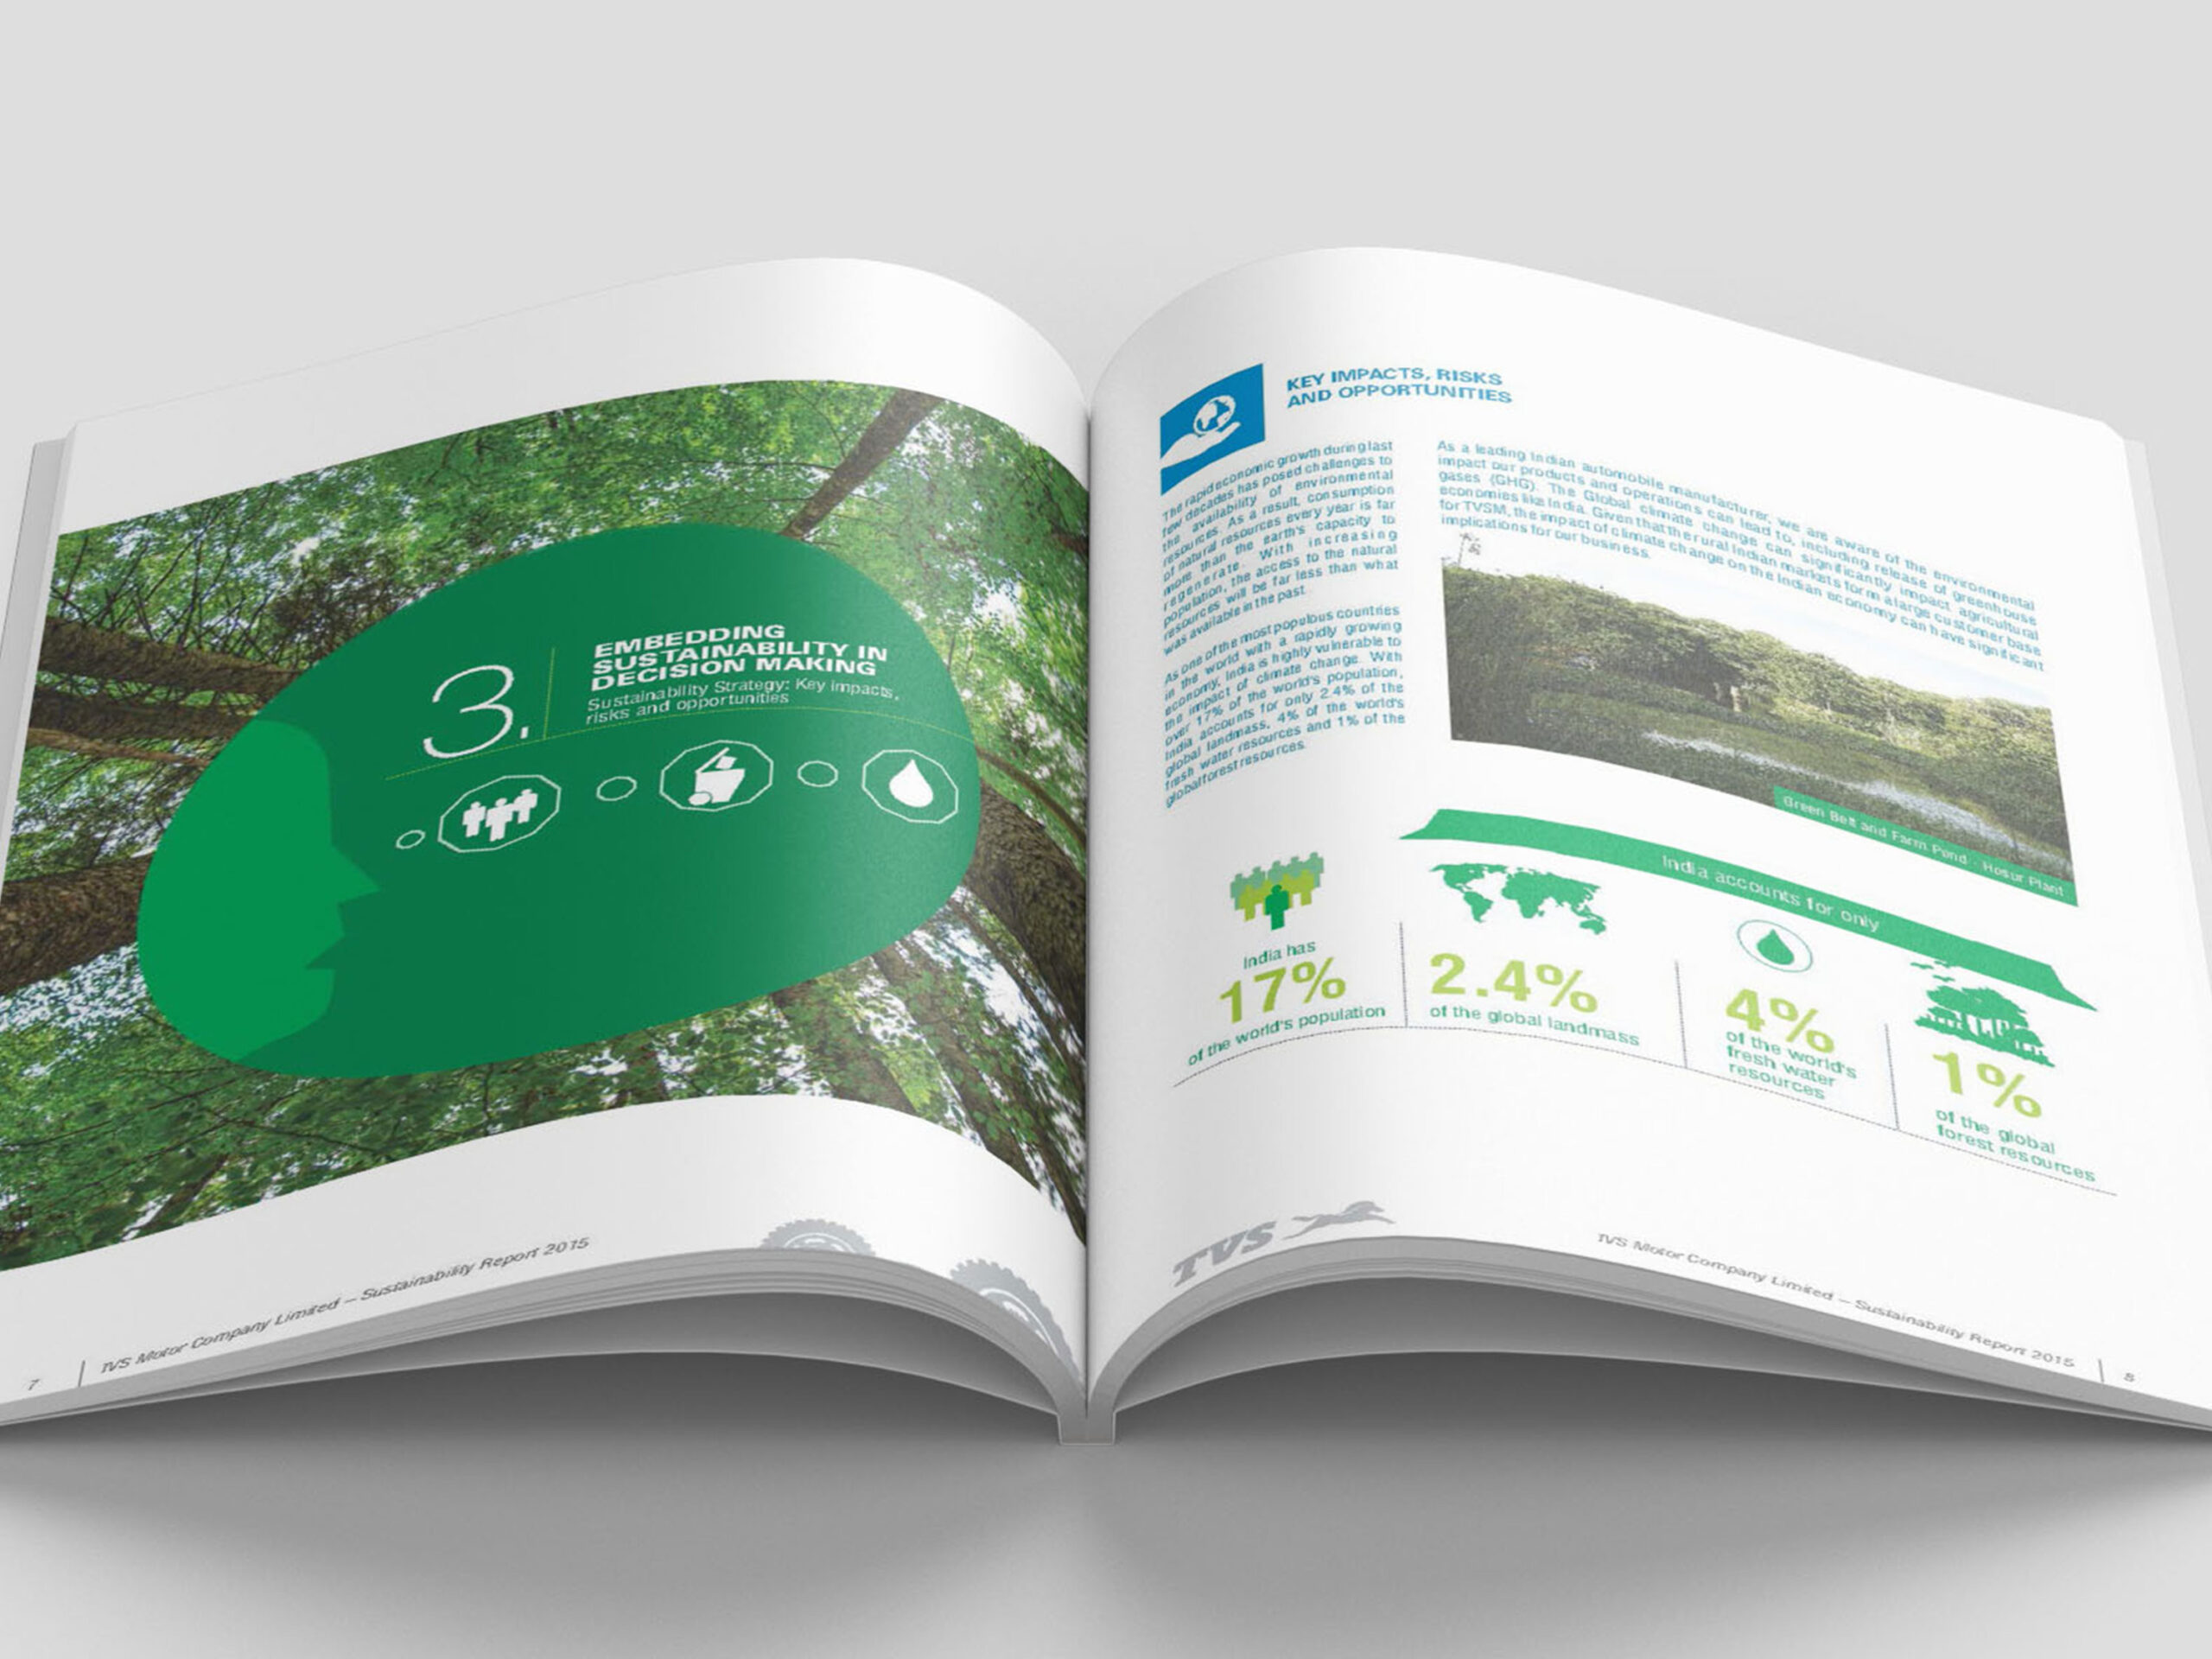 TVS Corporate Sustainability Report 2015